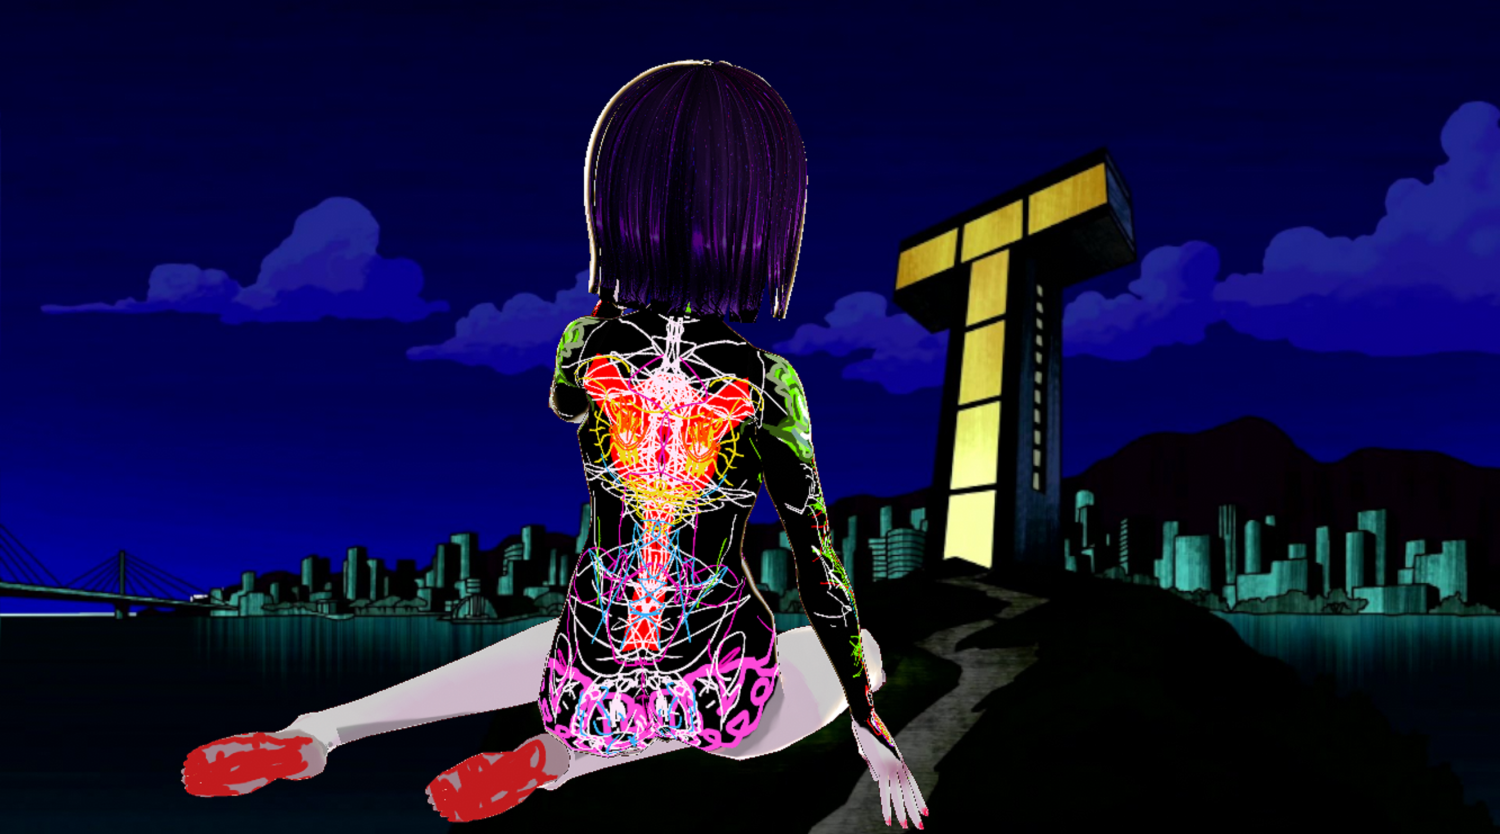 mirai nikki - yuno gasai hurt- anime character - vrm model 3D